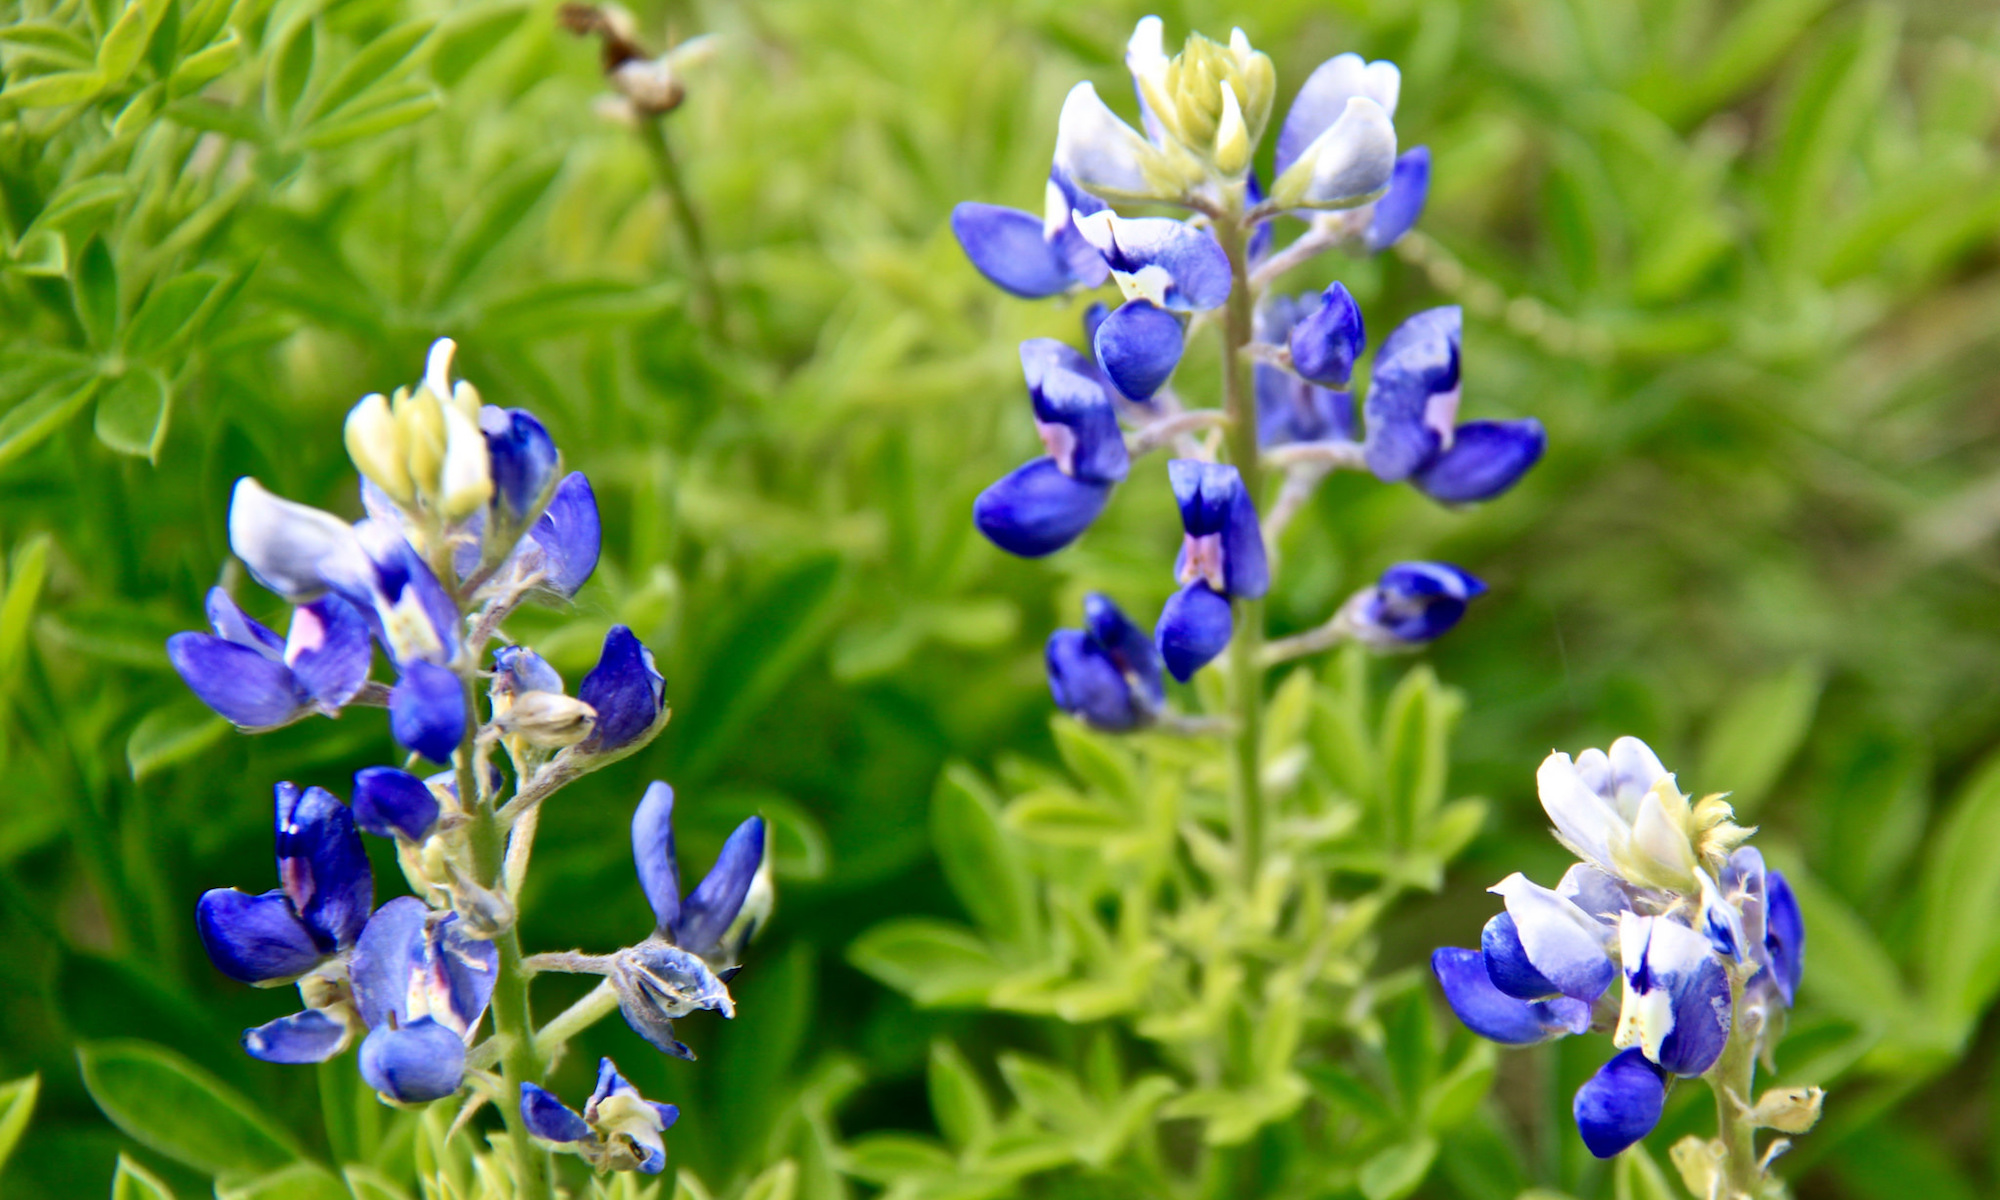 A photo of bluebonnets in a Texas field